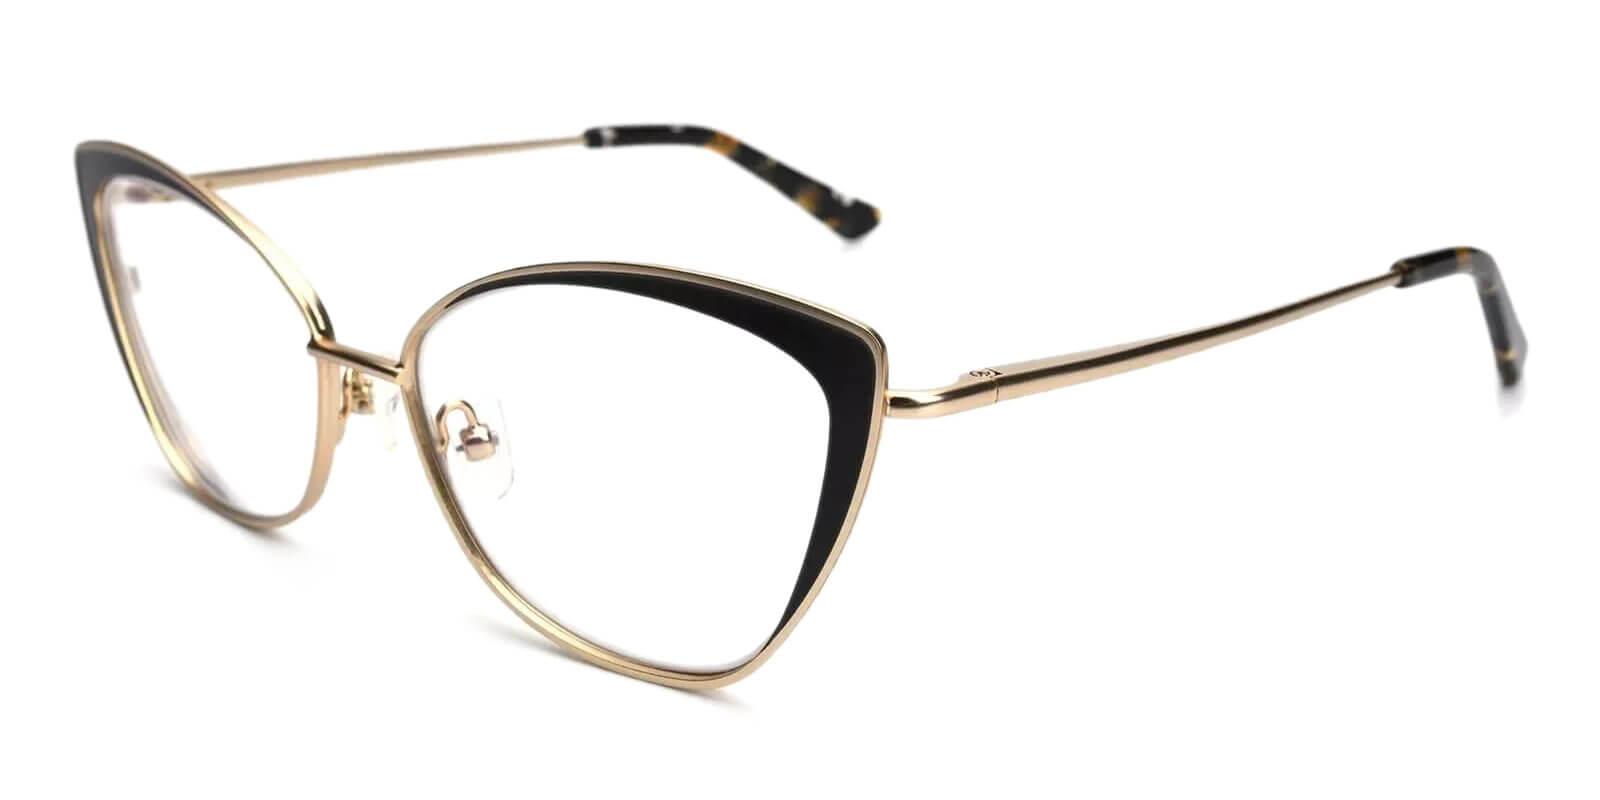 Paisley Gold Metal Eyeglasses , NosePads , SpringHinges Frames from ABBE Glasses